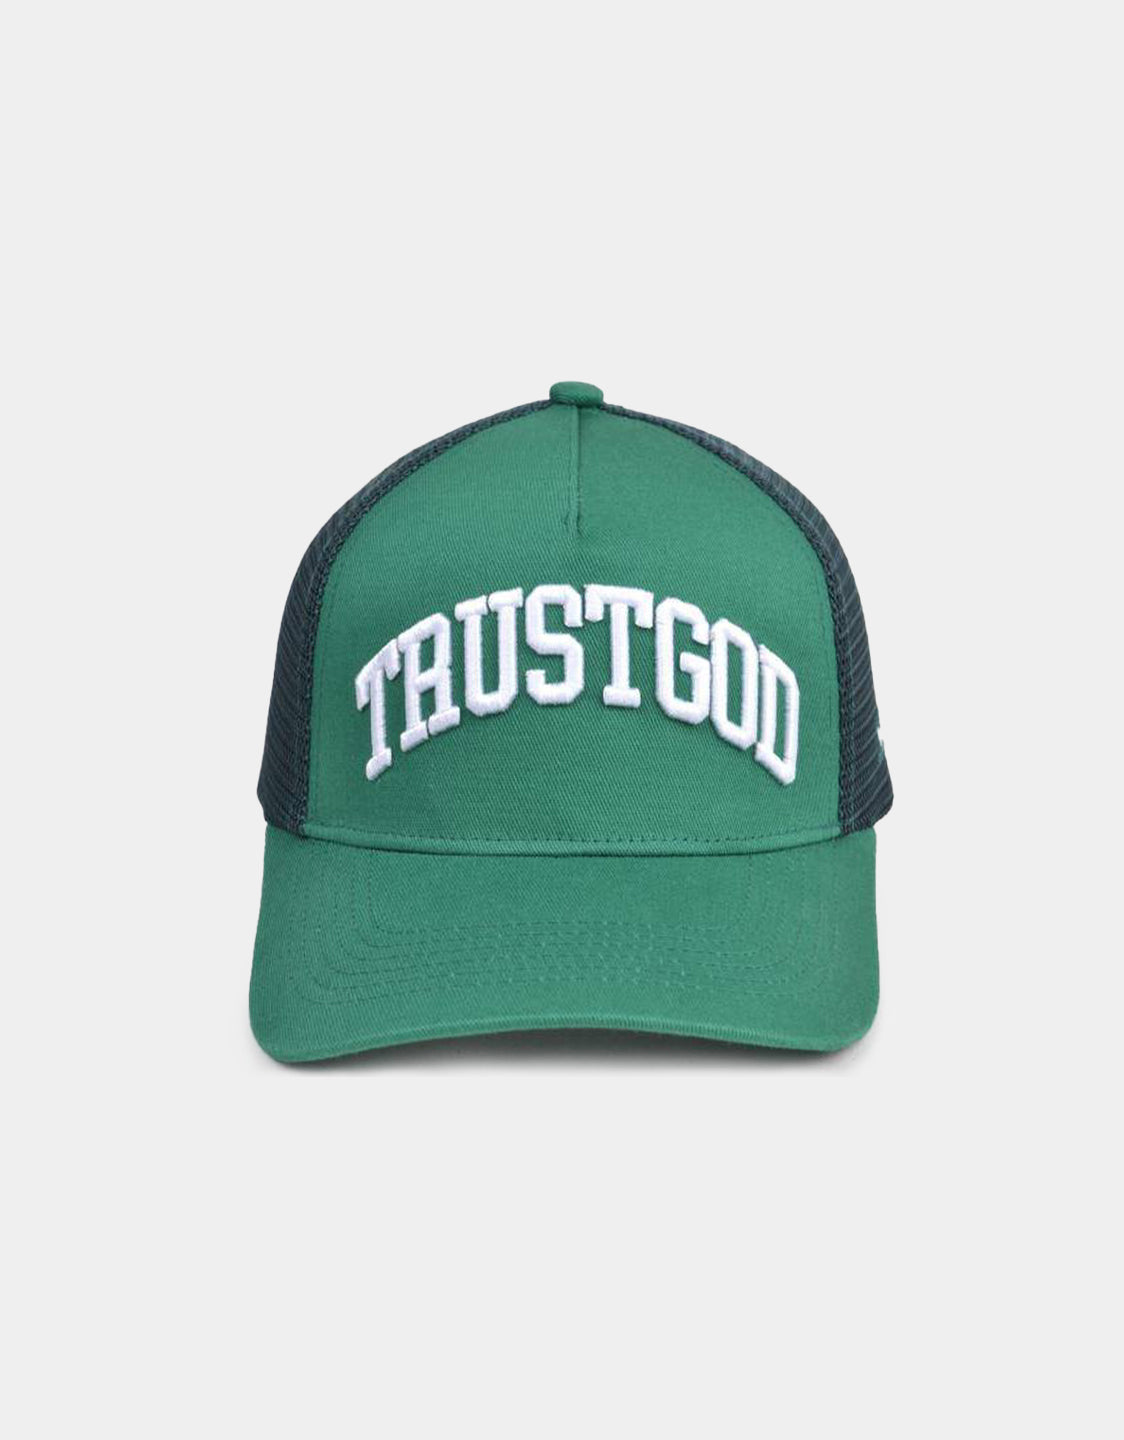 Trust God Premium Trucker Hat - Forest Green